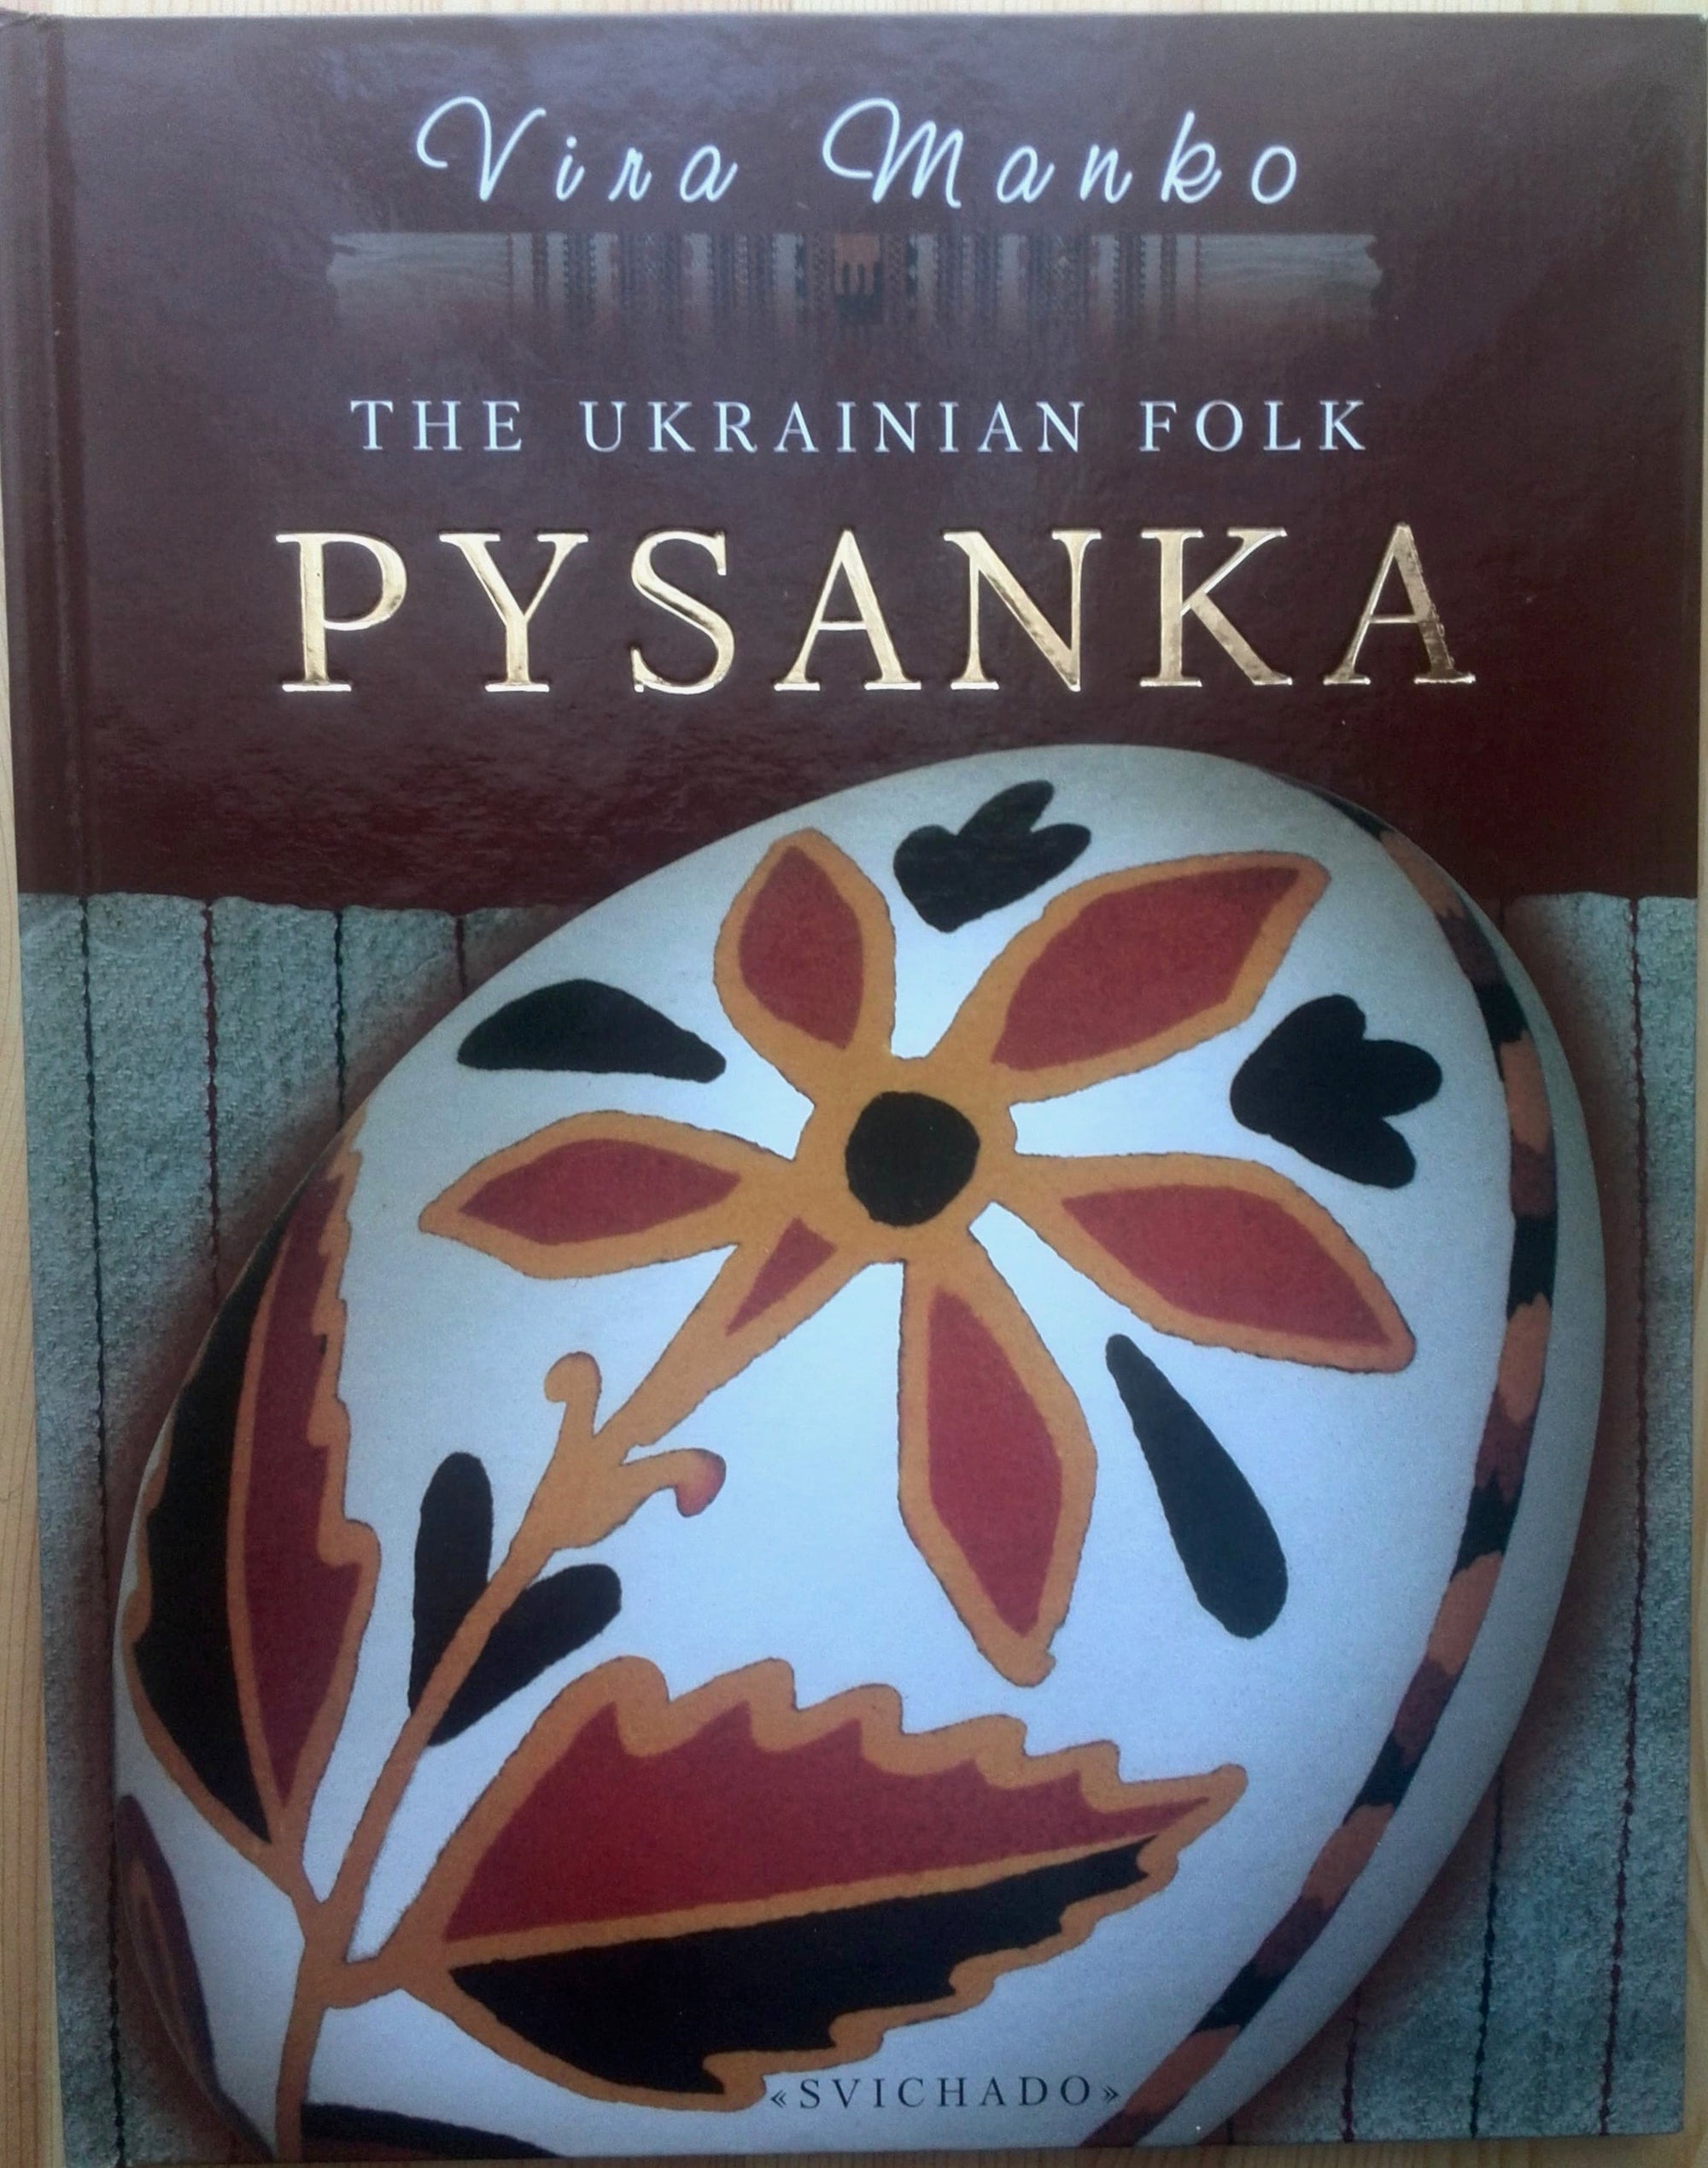 The Ukrainian Folk Pysanka - Vira Manko - English